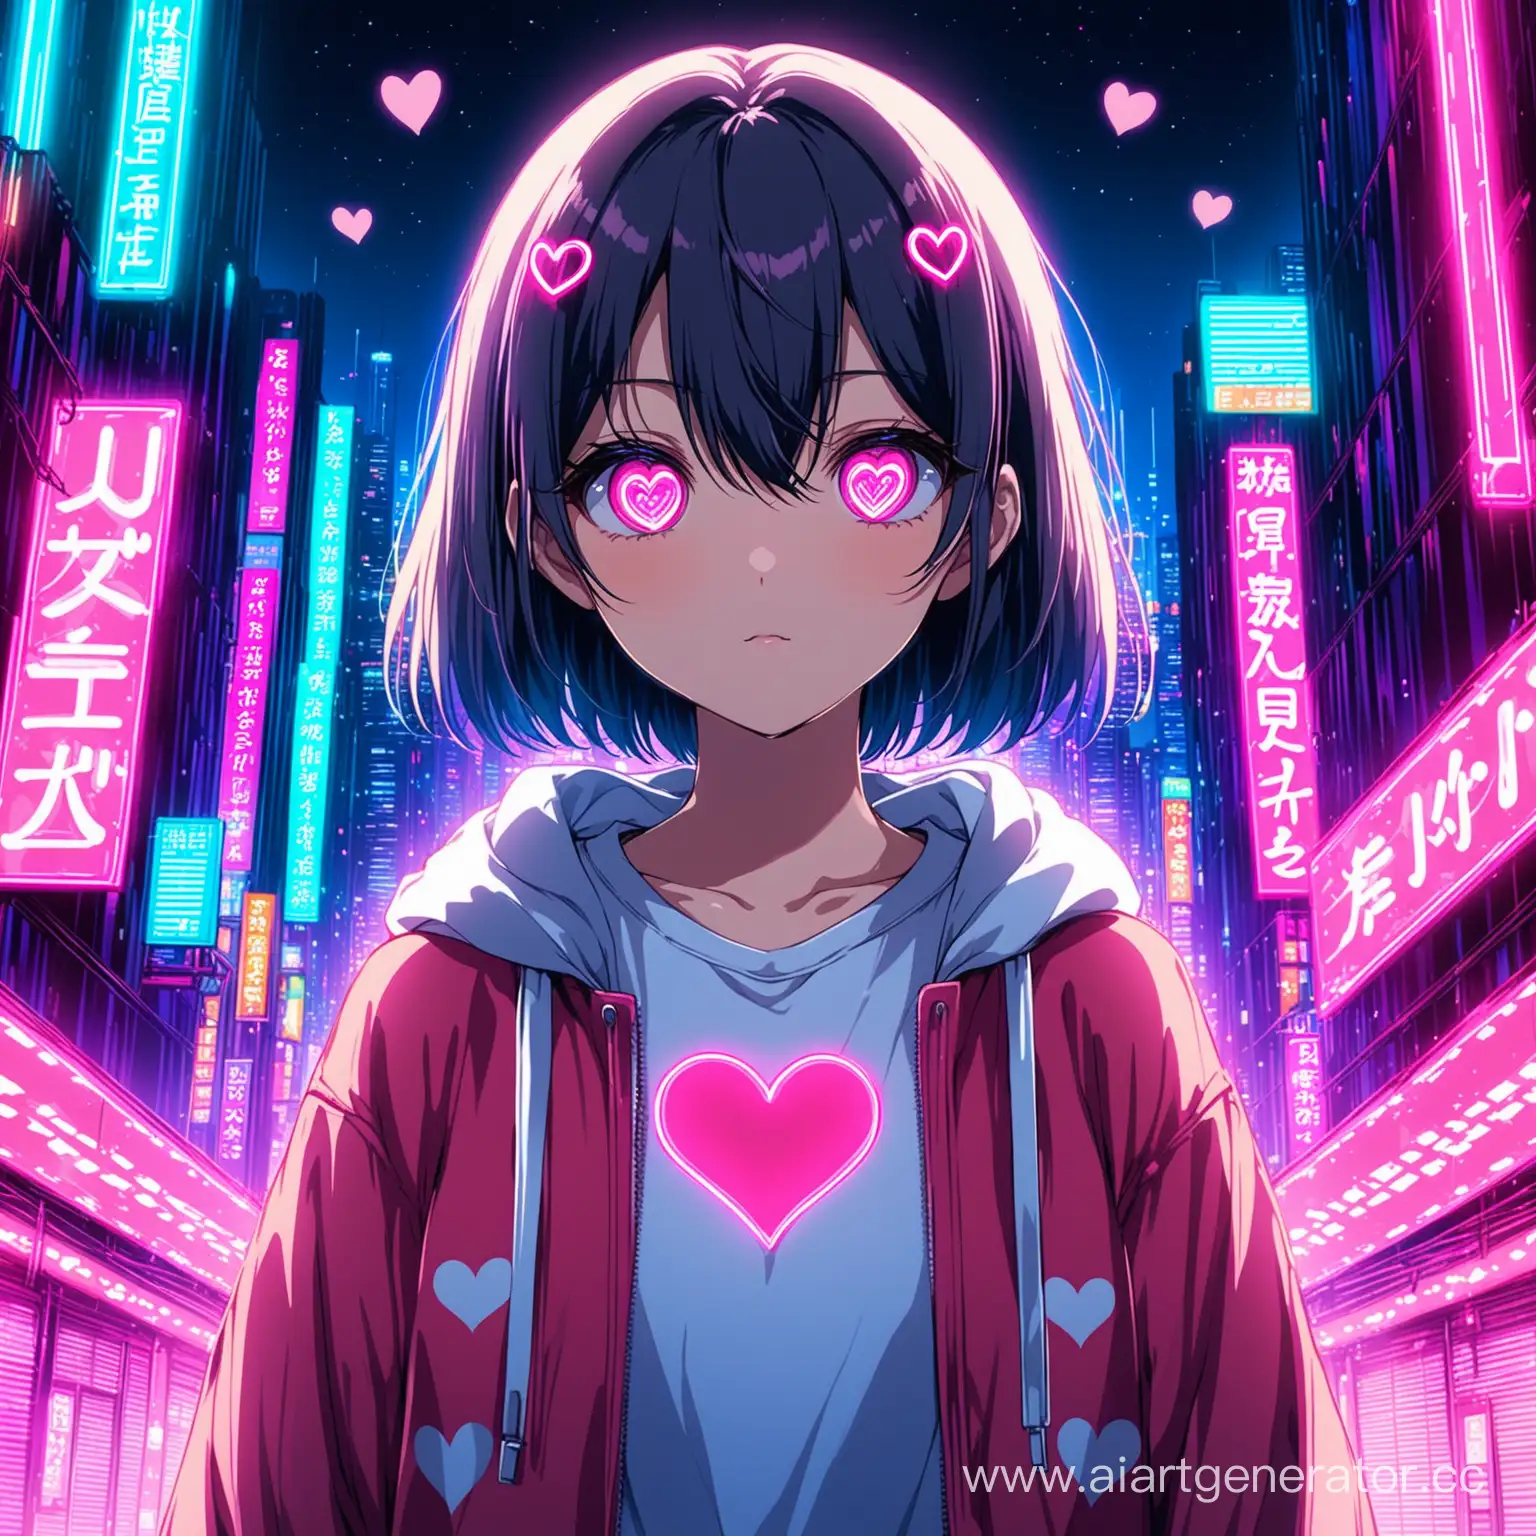 Neon-City-Anime-Girl-with-Heart-Eyes